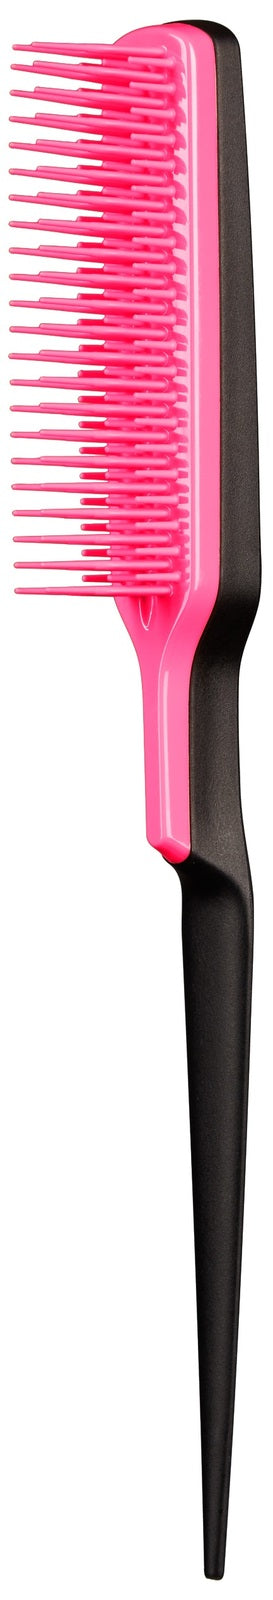 Tangle Teezer: Backcombing Hair Brush - Pink/Black